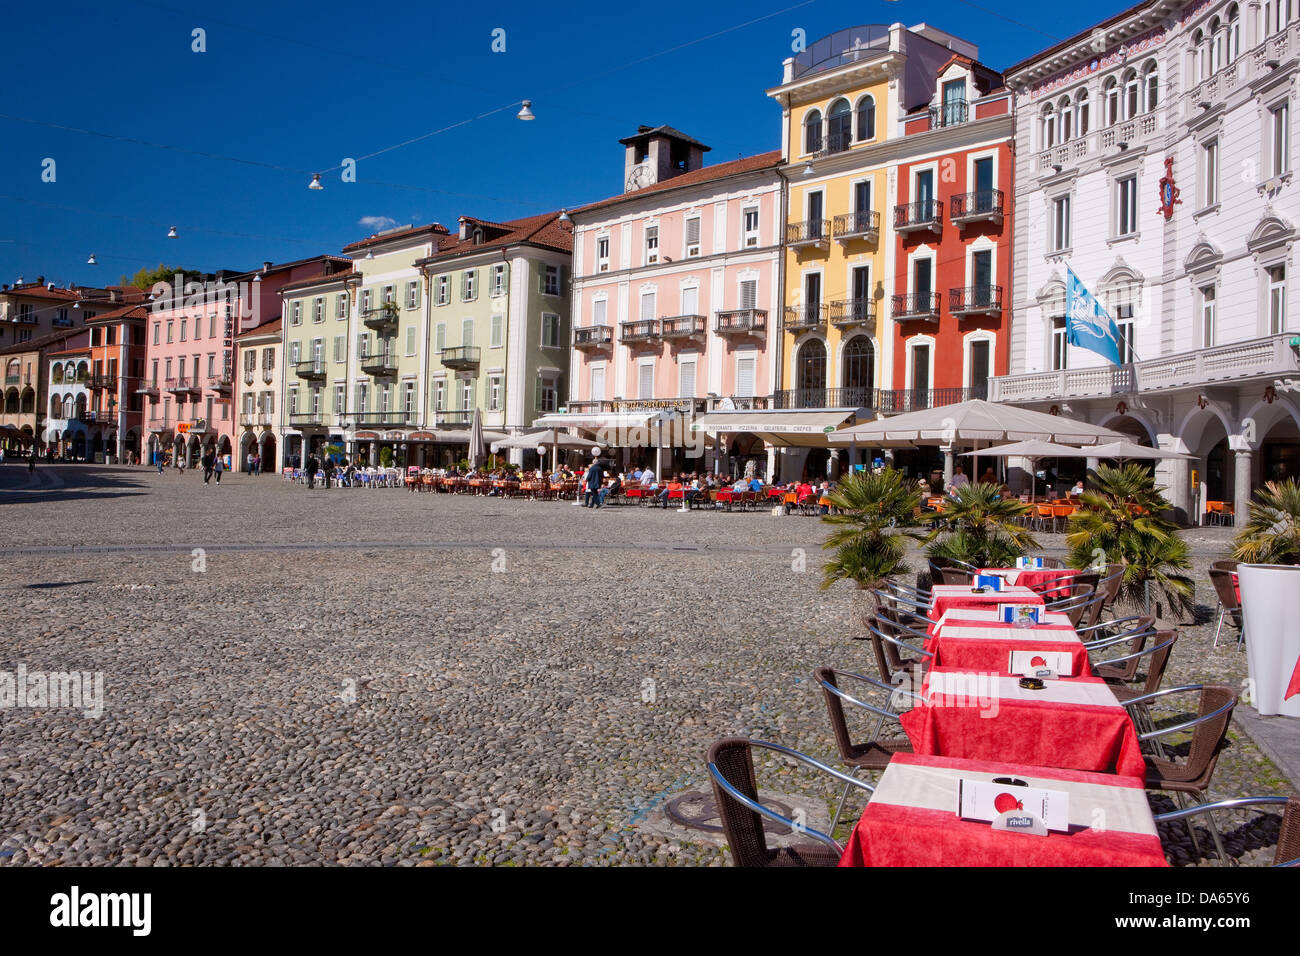 Piazza Grande, place, Locarno, canton, TI, Ticino, South Switzerland, town, city, Switzerland, Europe, street restaurant, facade Stock Photo